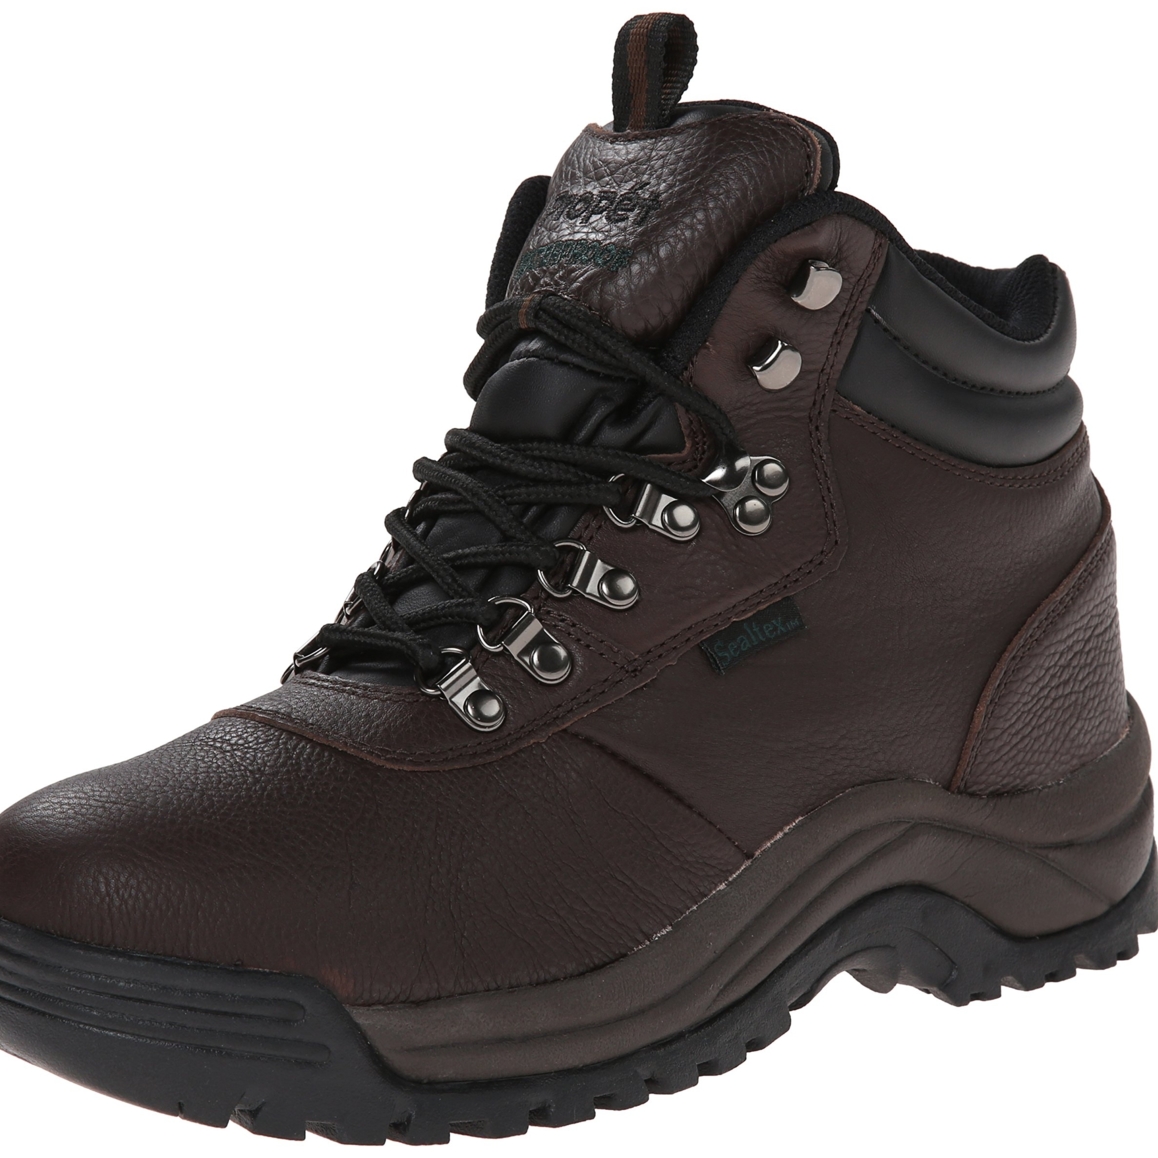 Propet Men's Cliff Walker Hiking Boot Bronco Brown - M3188BRO - BRONCO BROWN, 8.5-4E